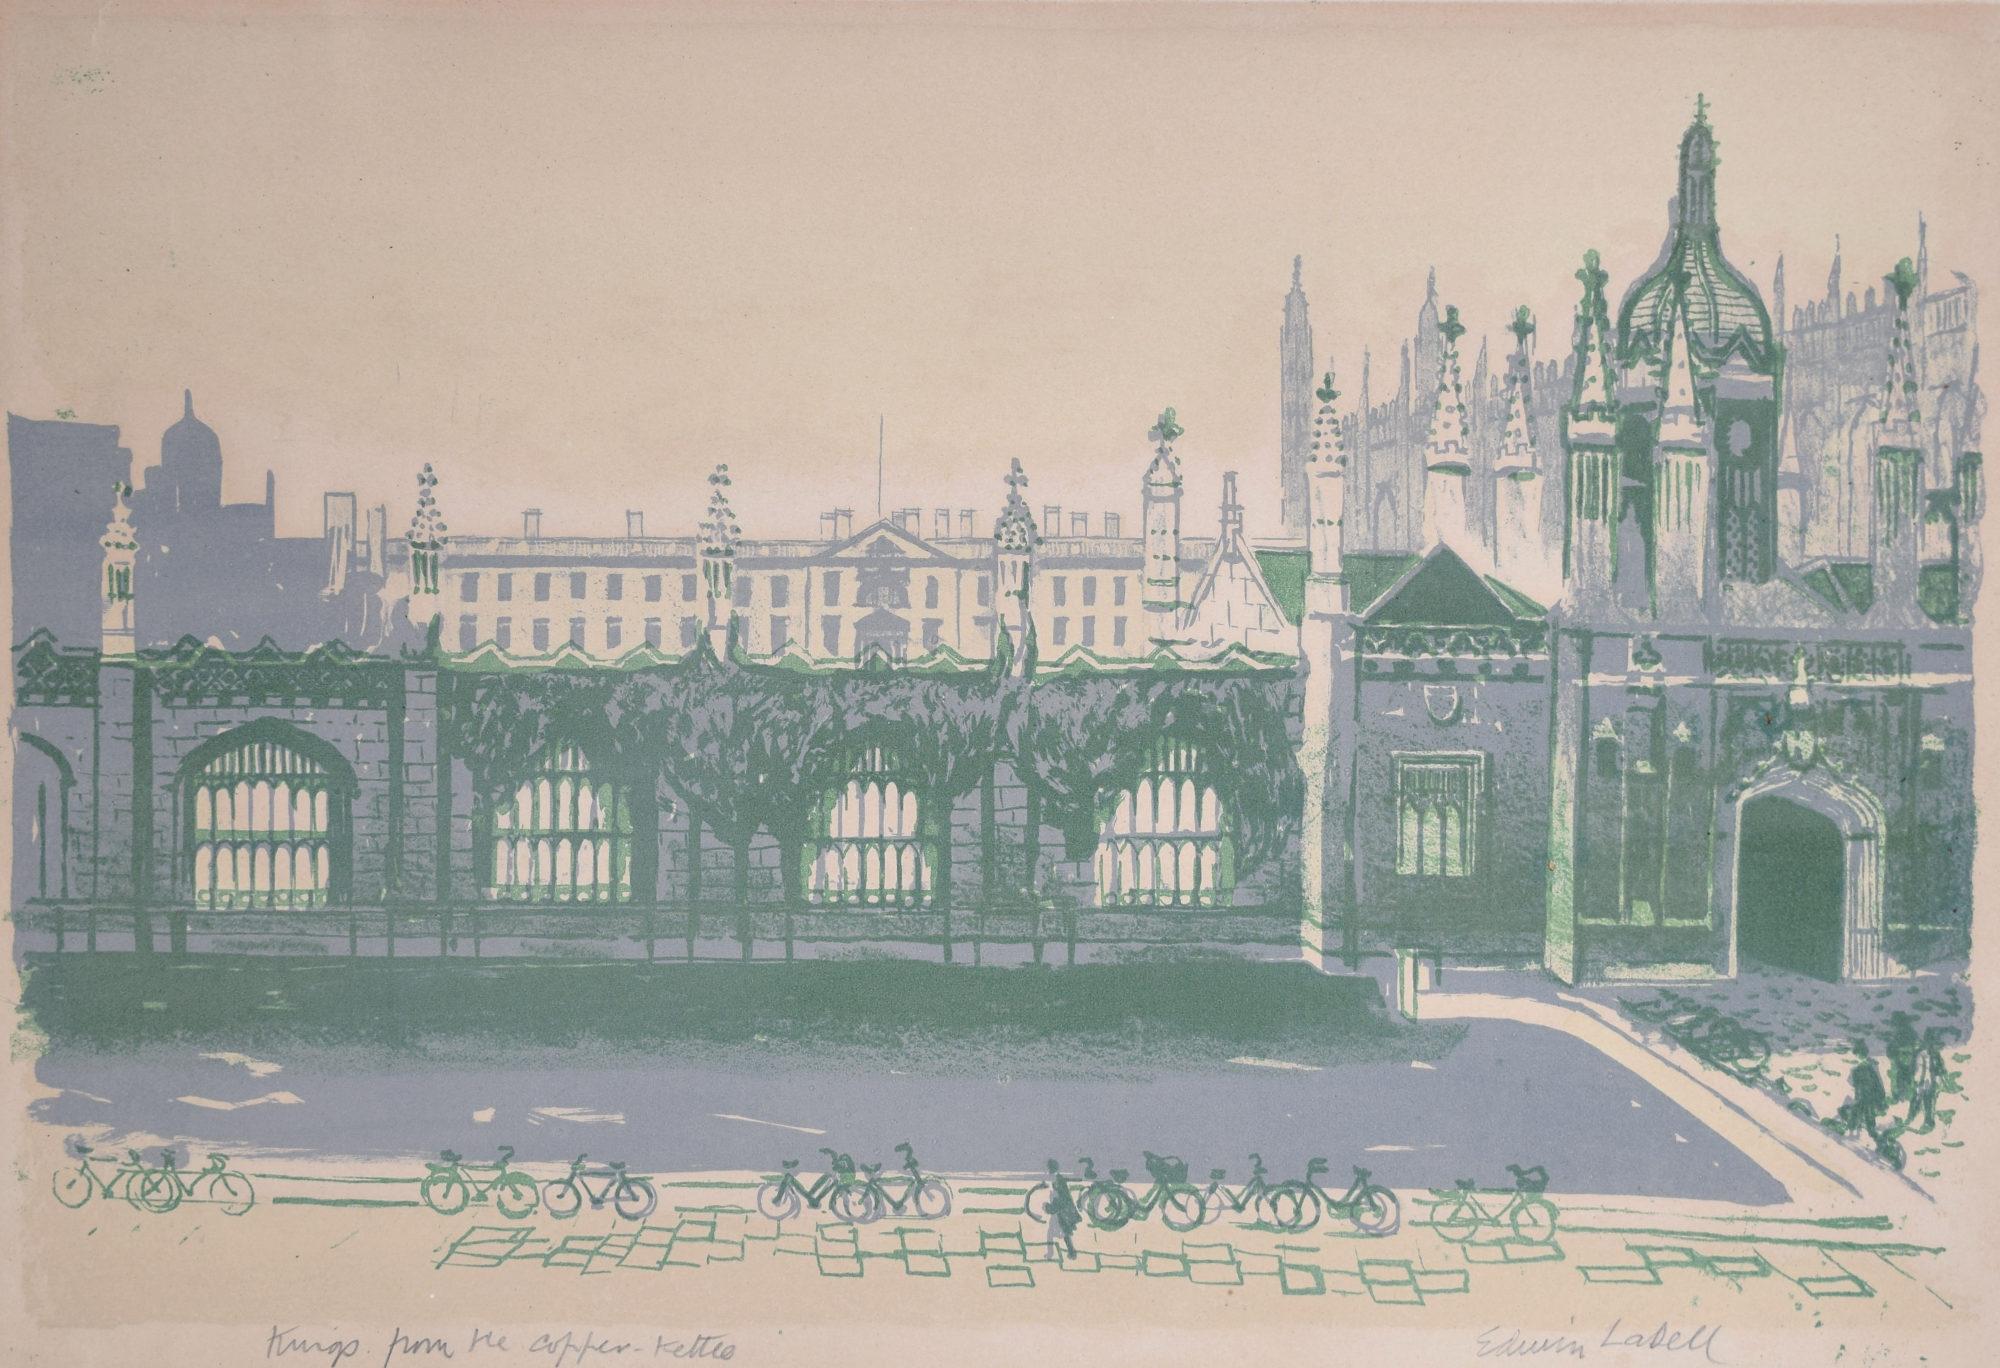 Edwin La Dell Cambridge King's College from Copper Kettle Signed Lithograph